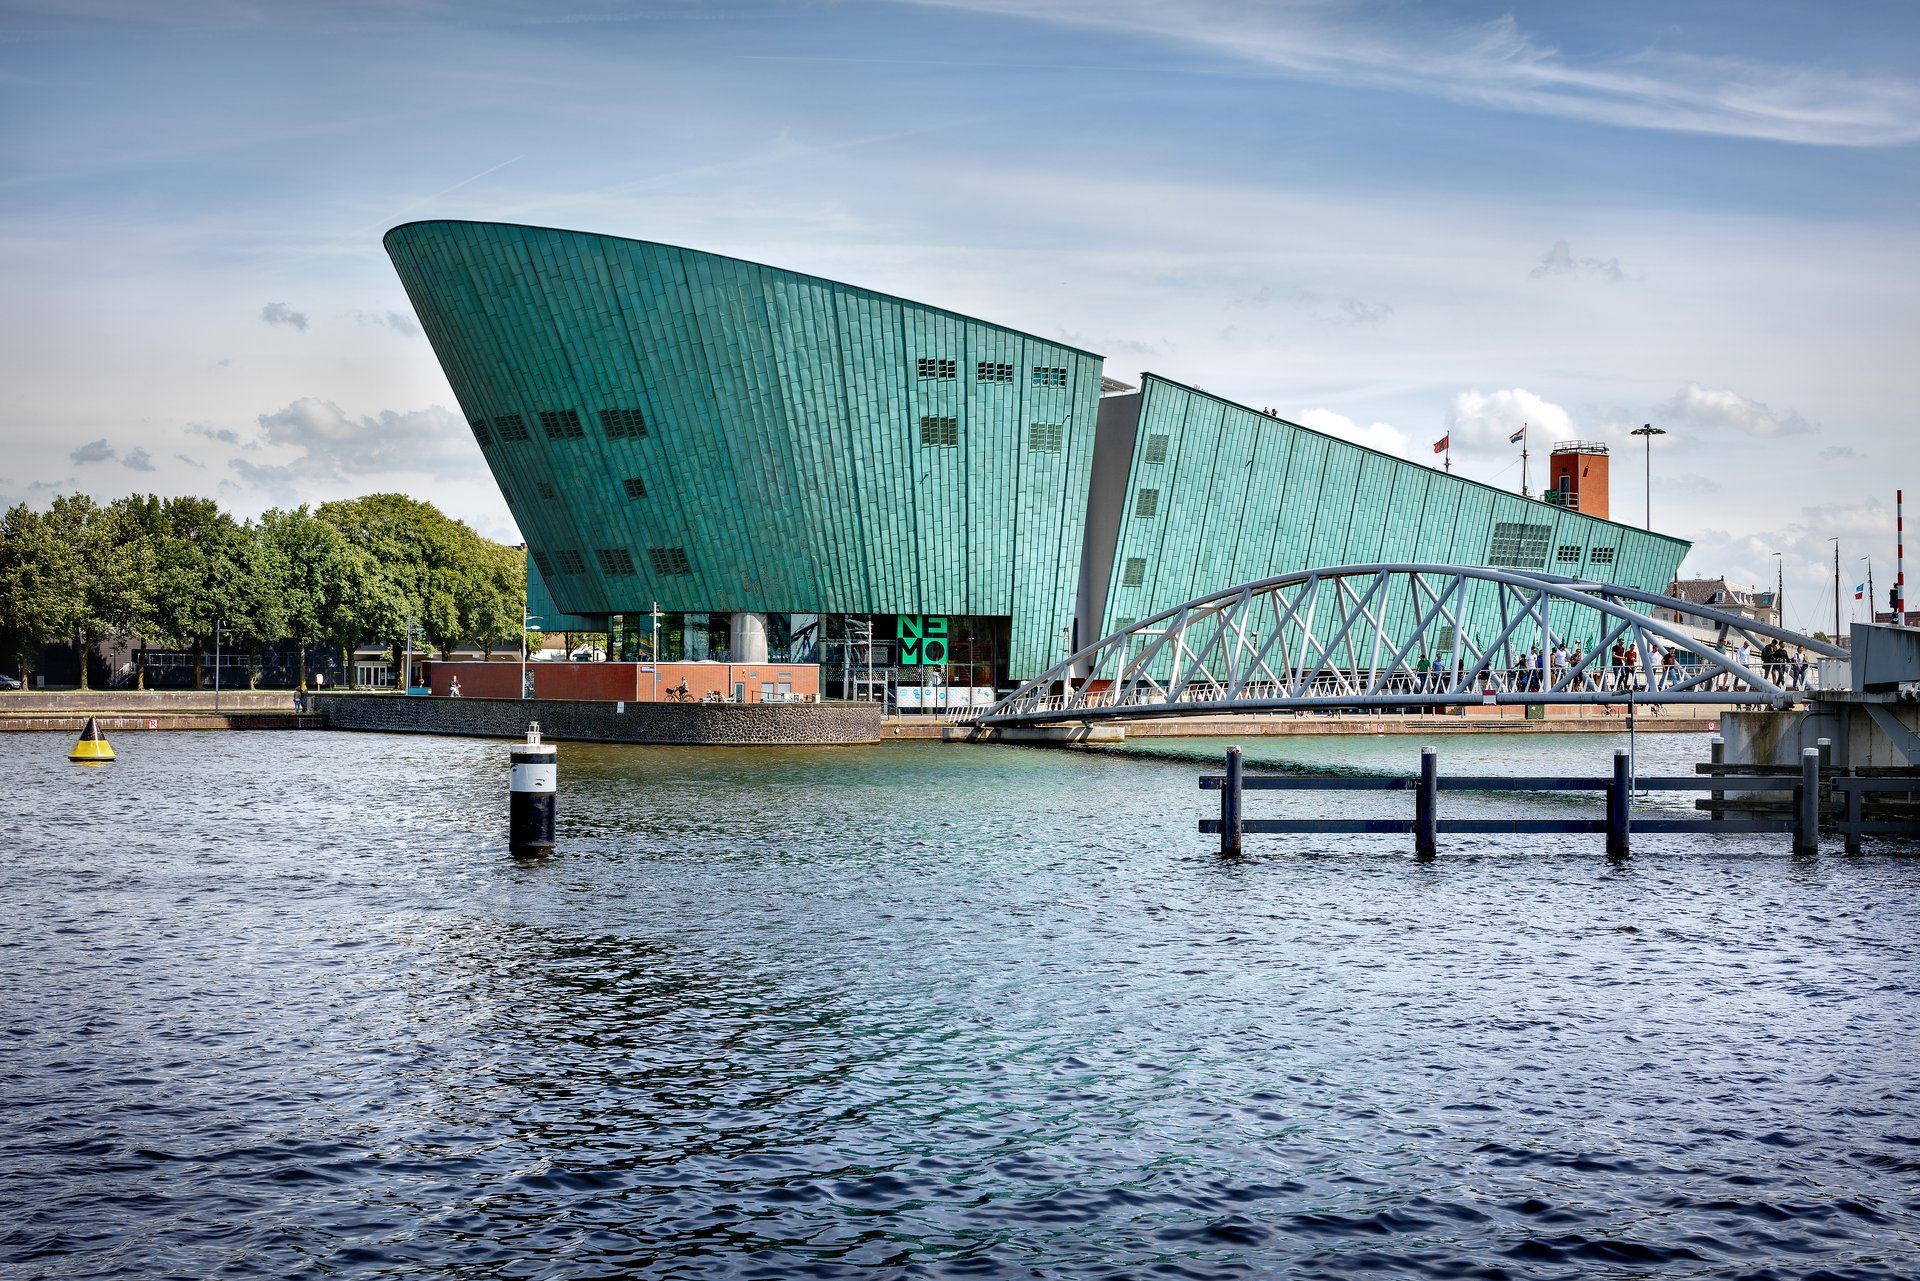 Das Nemo-Wissenschaftsmuseum in Amsterdam